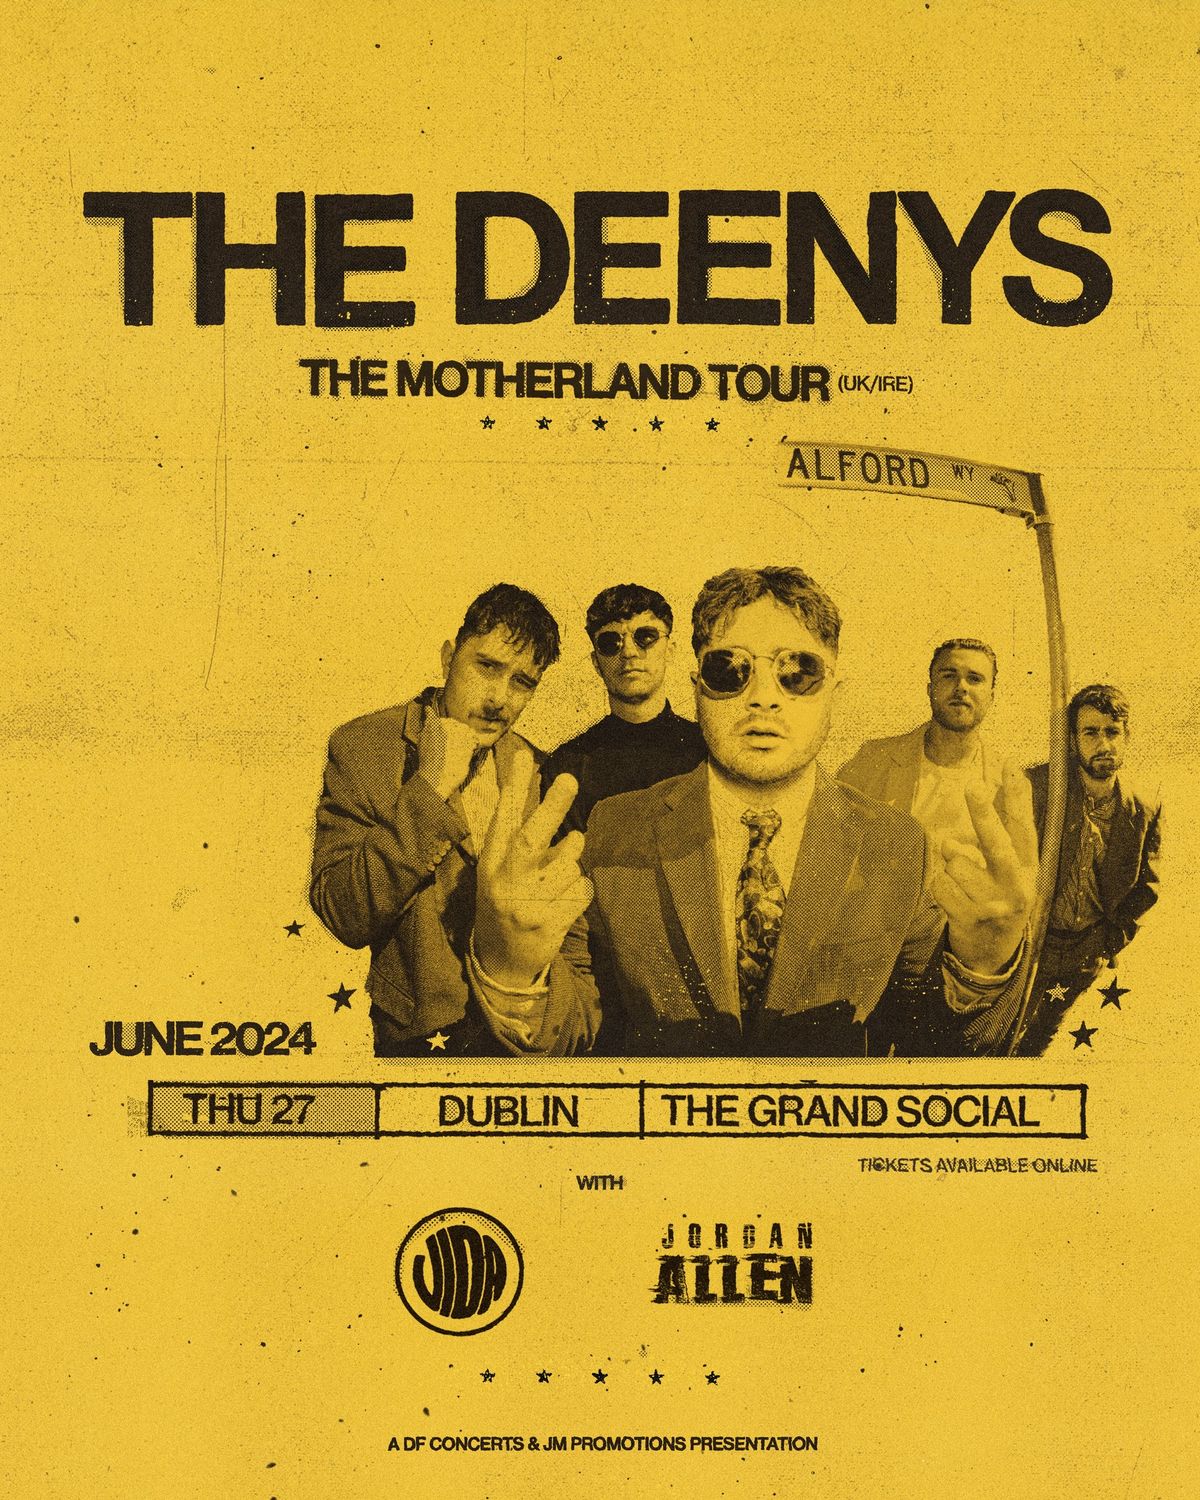 The Deenys - The Motherland Tour - DUBLIN